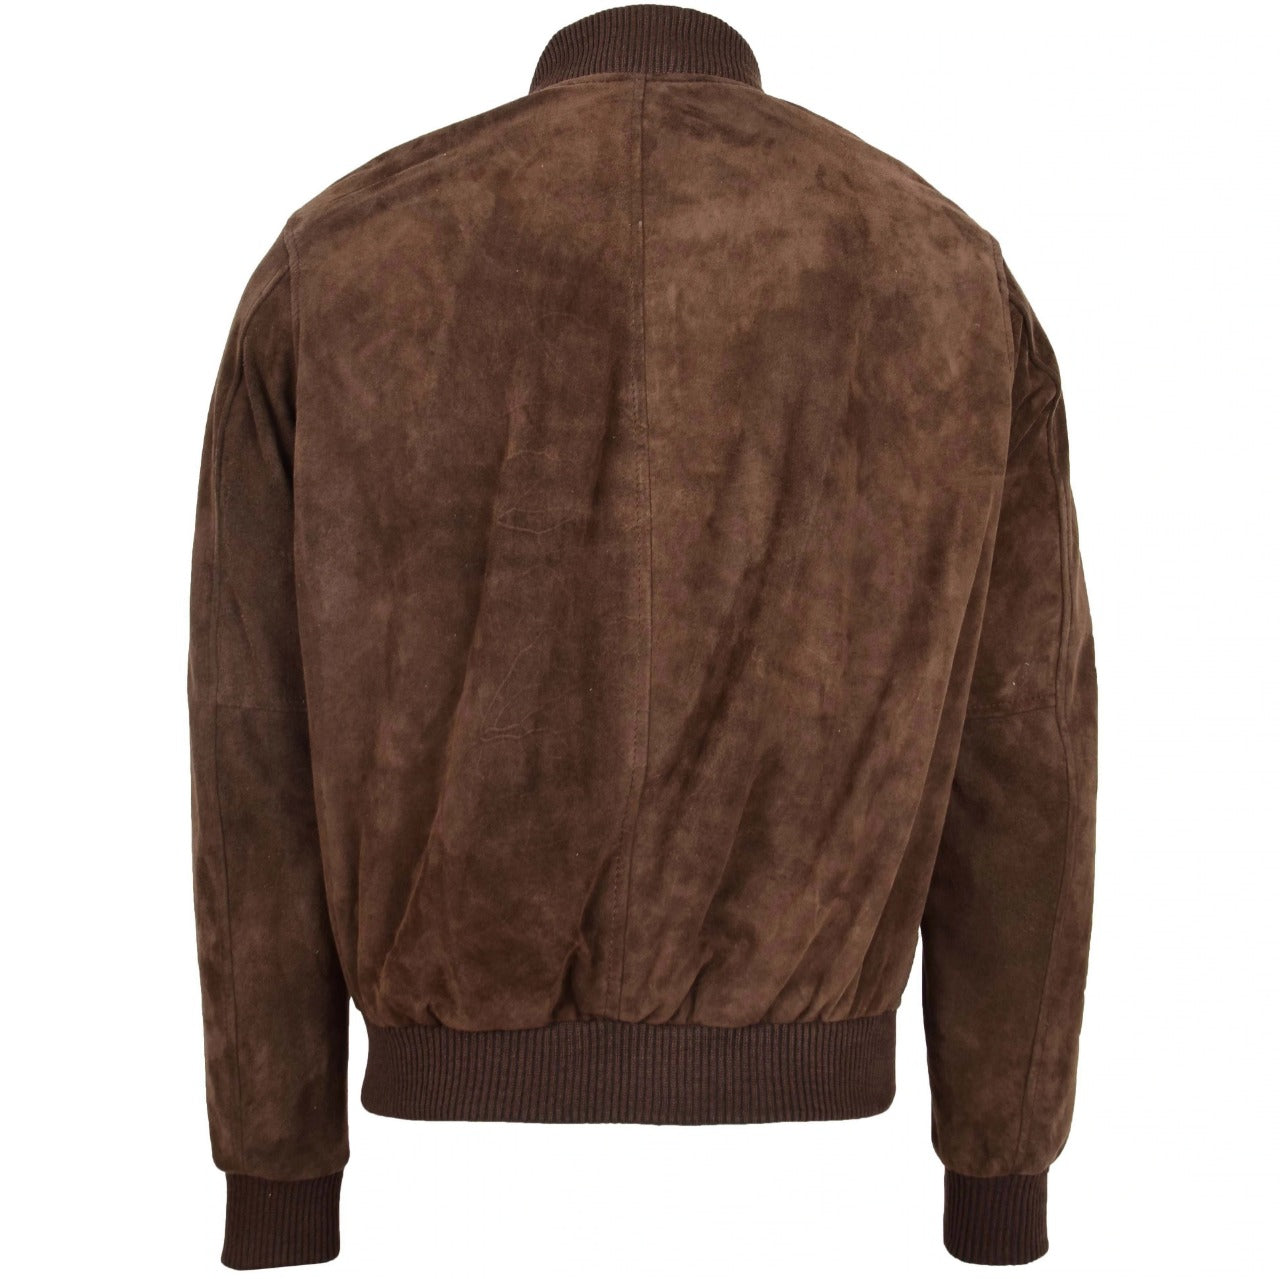 A2 Bomber Men's Dark Brown Suede Leather Jacket